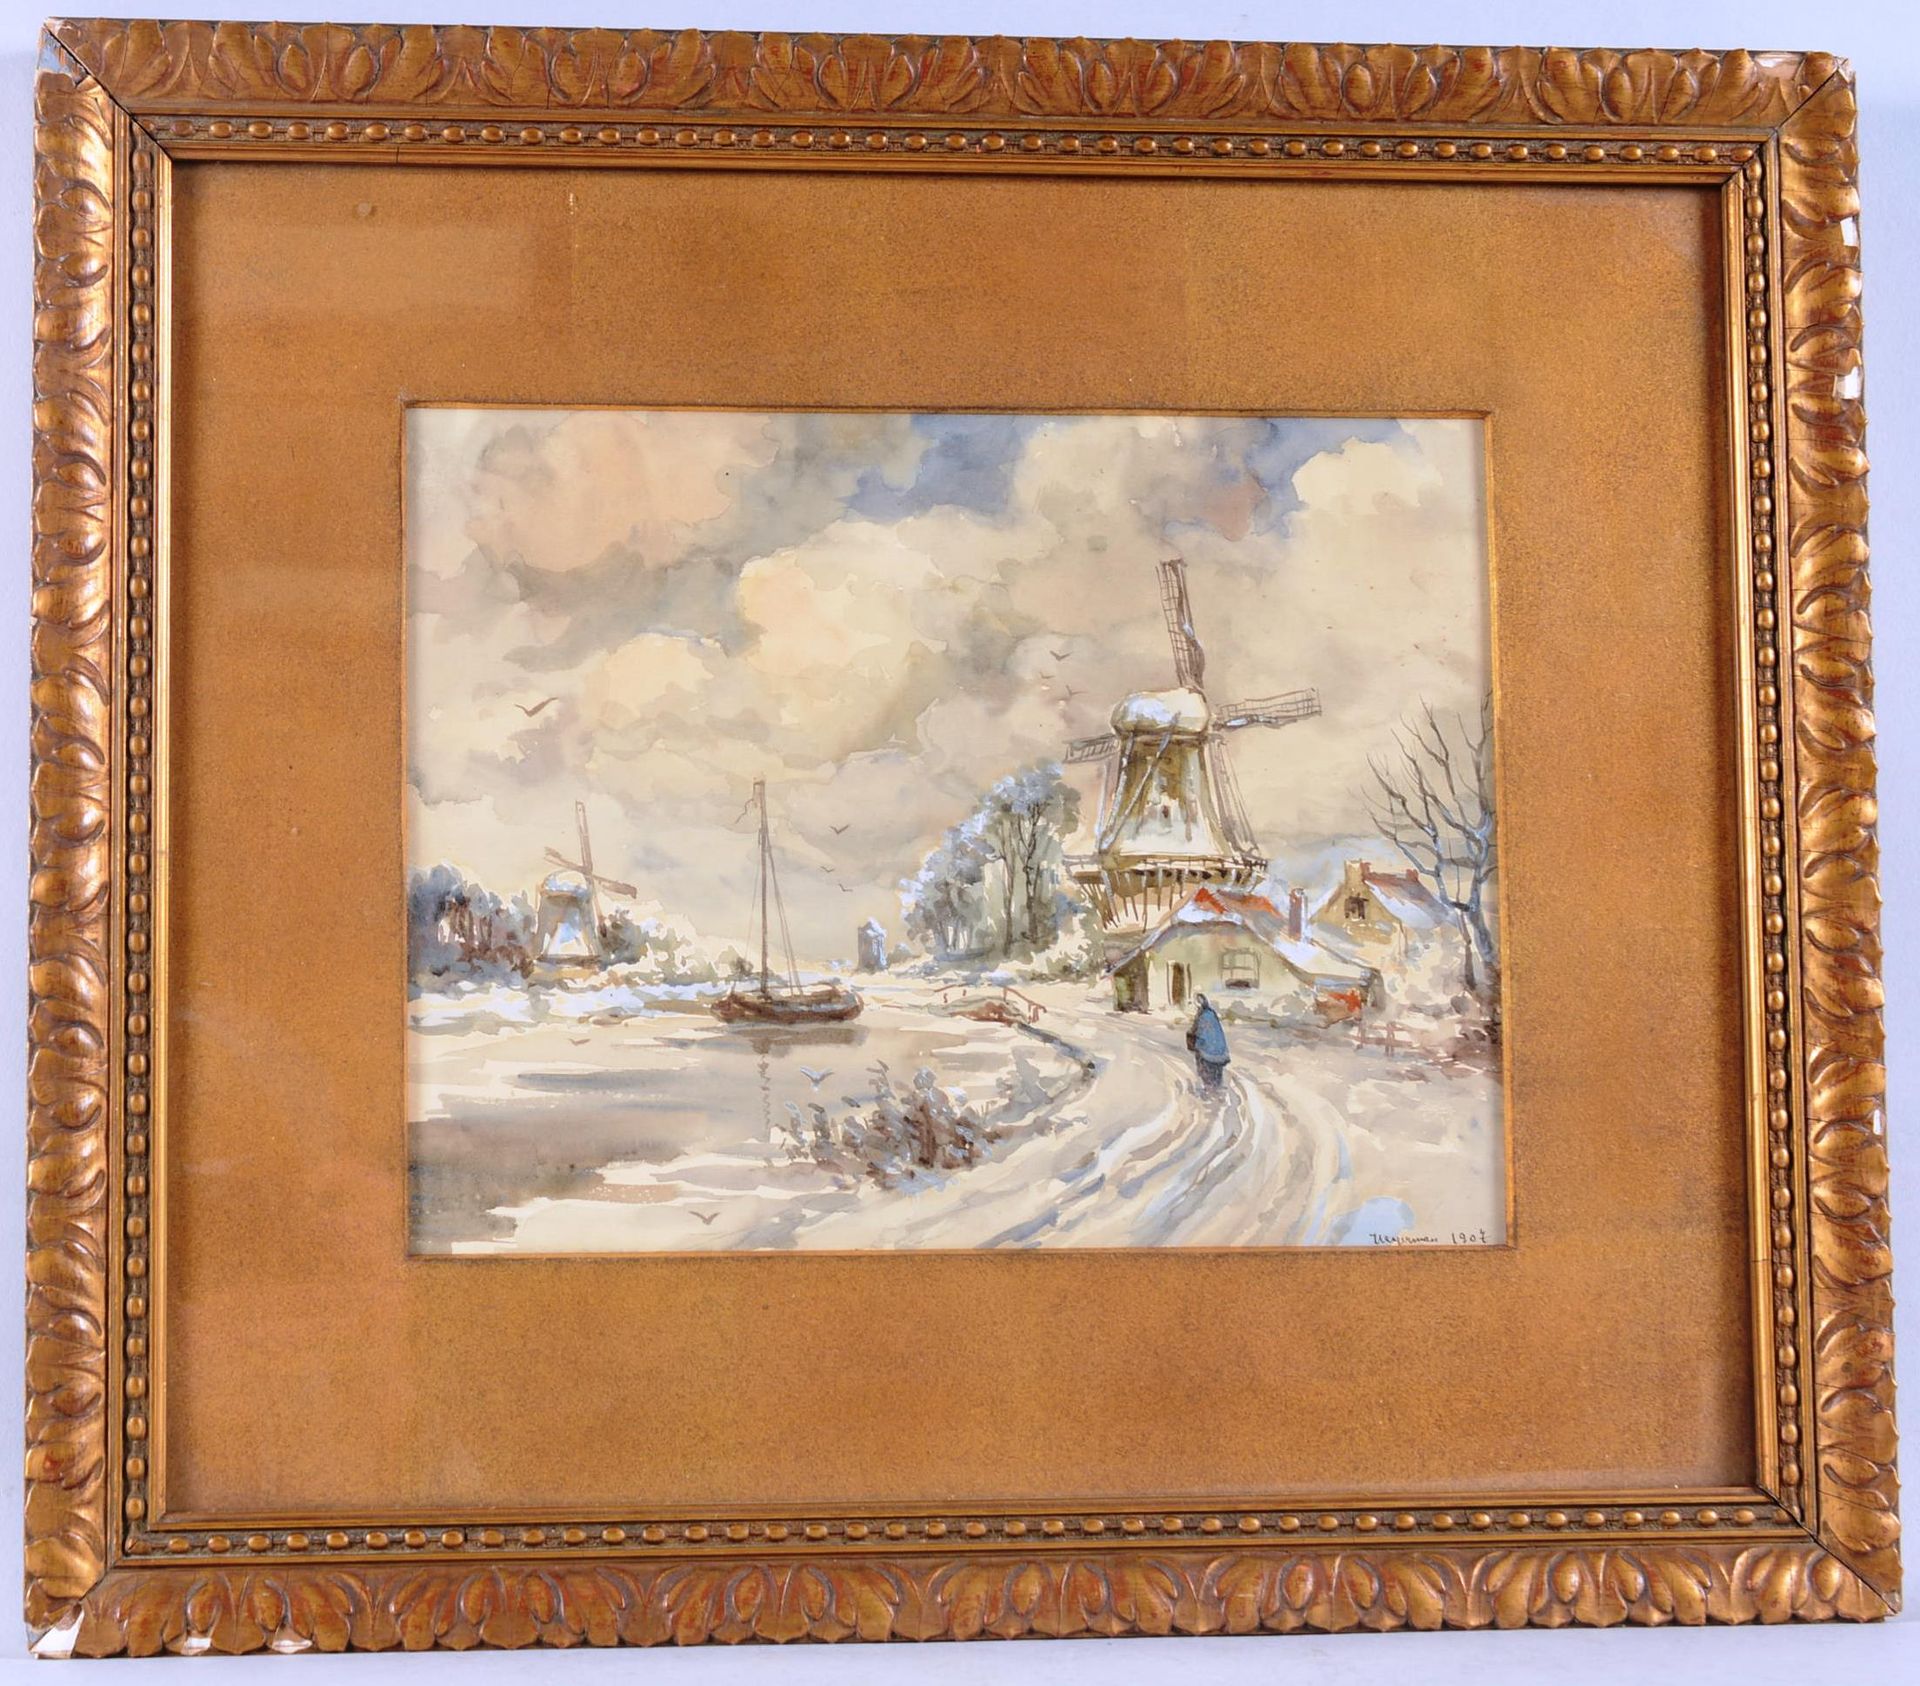 " Paysage d'hiver avec moulin" Marie HEYERMANS (1859-1937)

" Paysage d'hiver av&hellip;